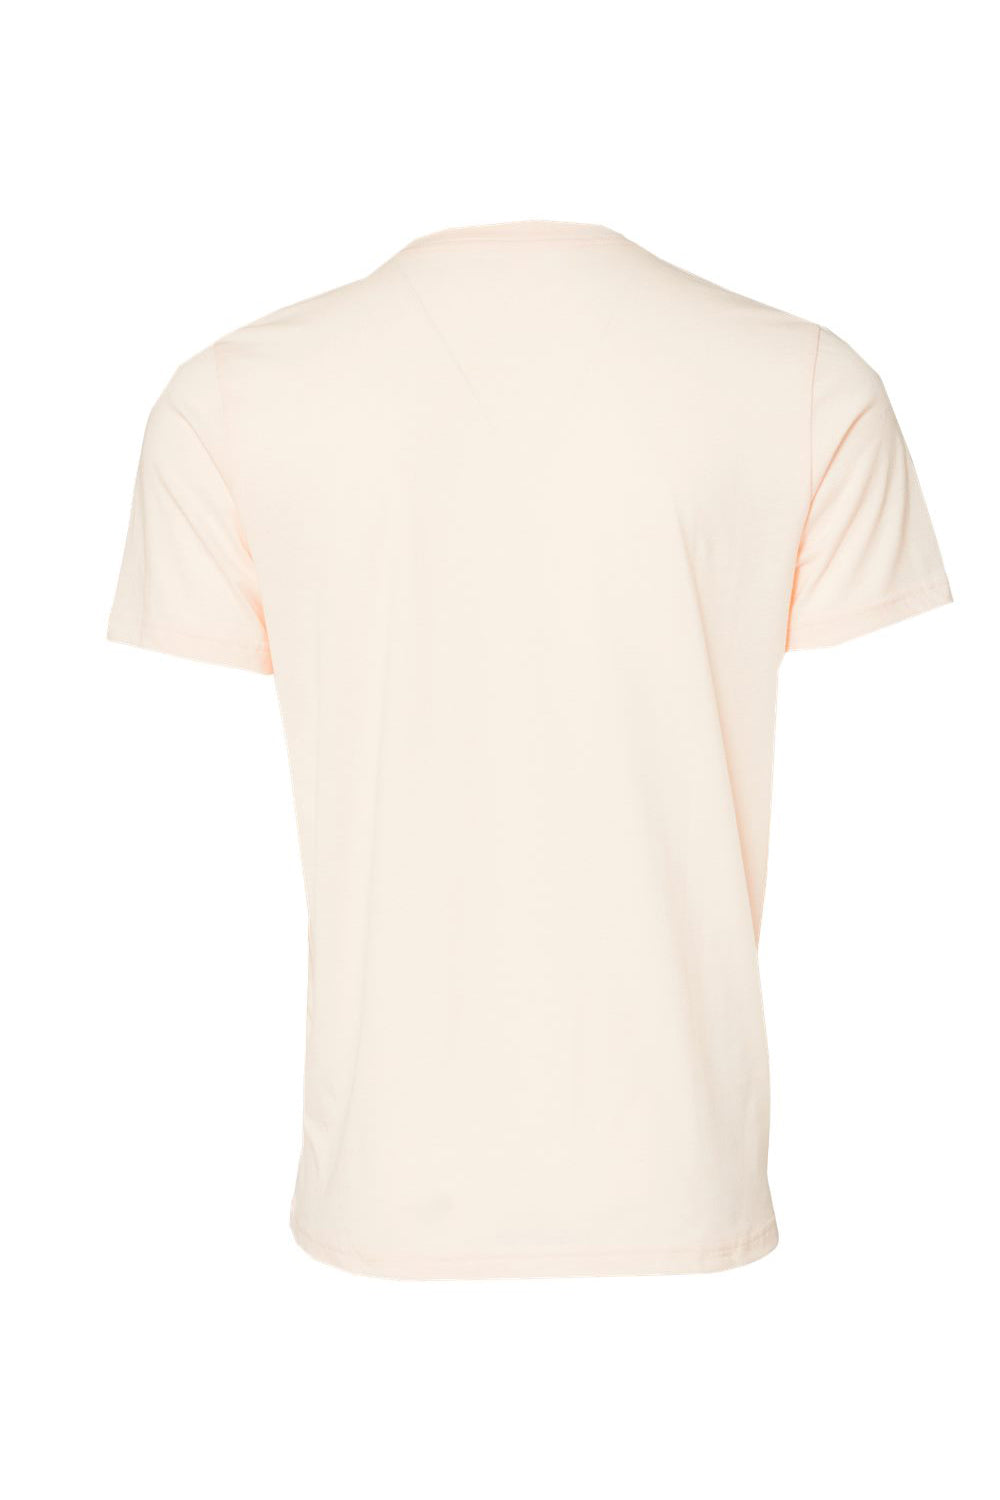 Bella + Canvas BC3413/3413C/3413 Mens Short Sleeve Crewneck T-Shirt Solid Natural Flat Back